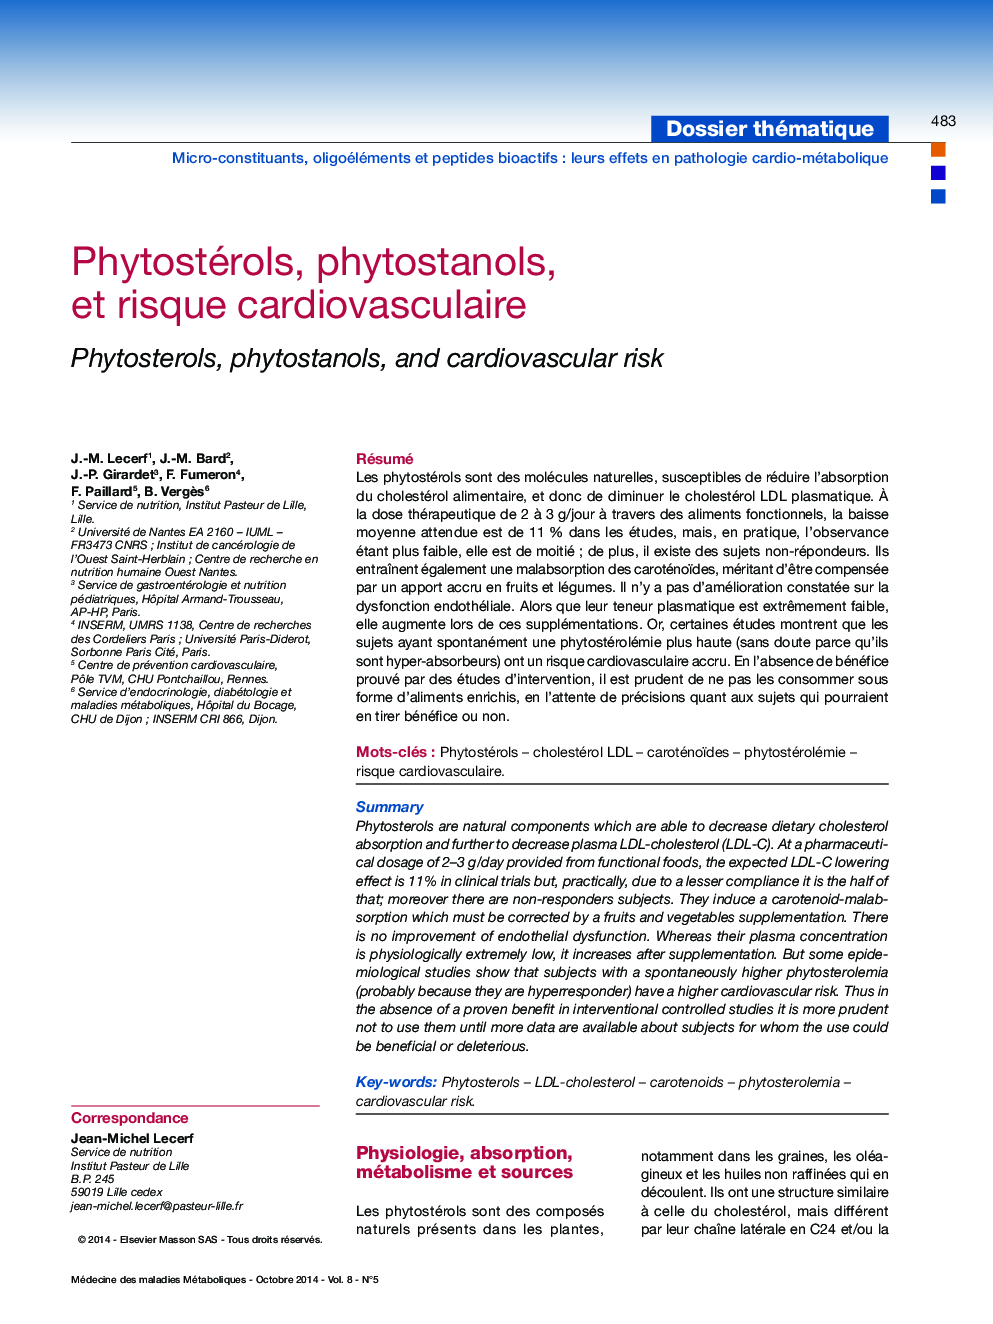 Phytostérols, phytostanols, et risque cardiovasculaire